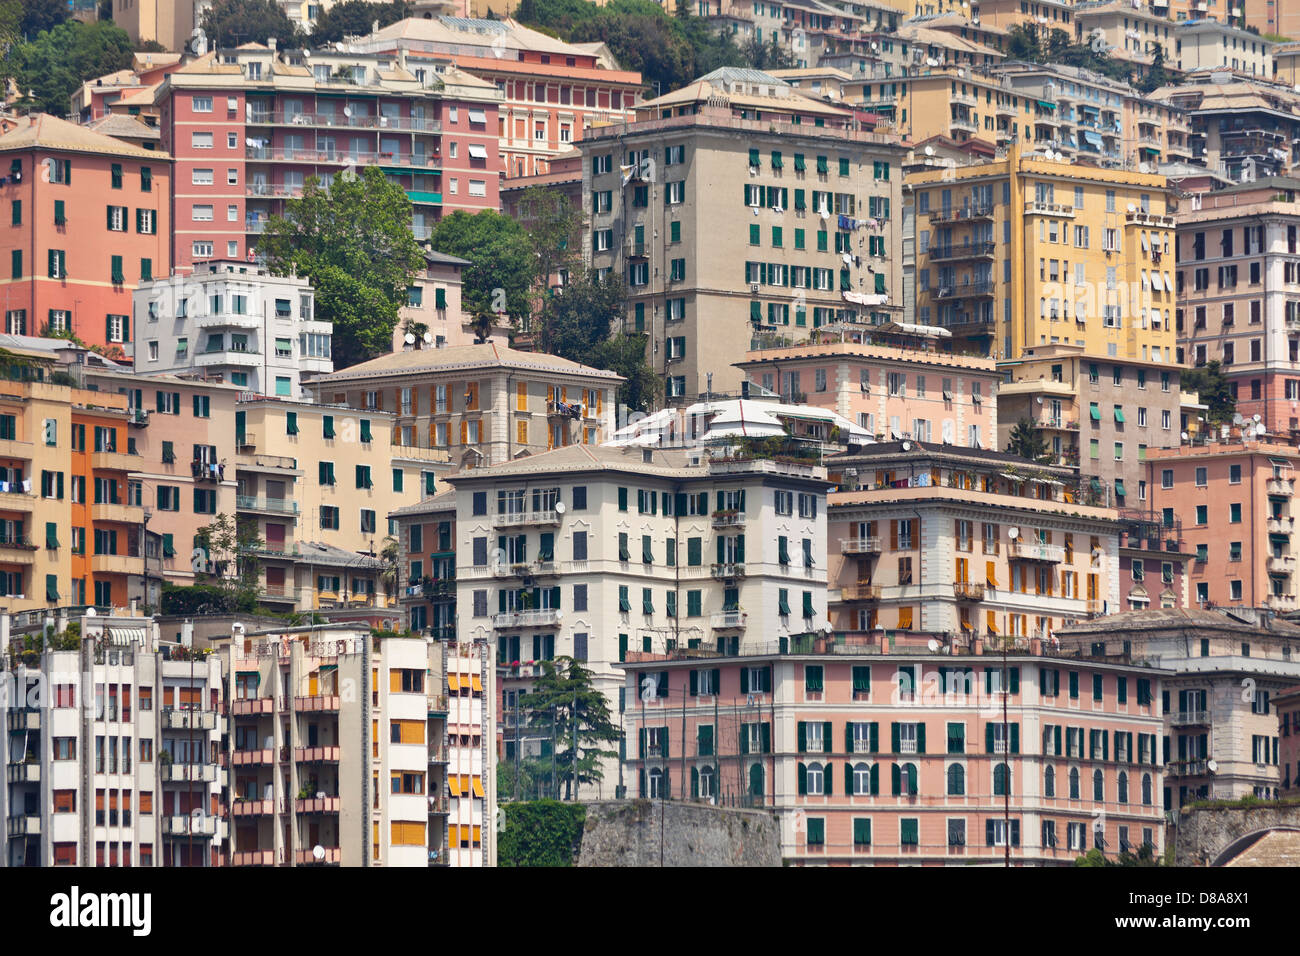 Genoa (Genova), Italy, typical older buildings built on the hillside Stock Photo